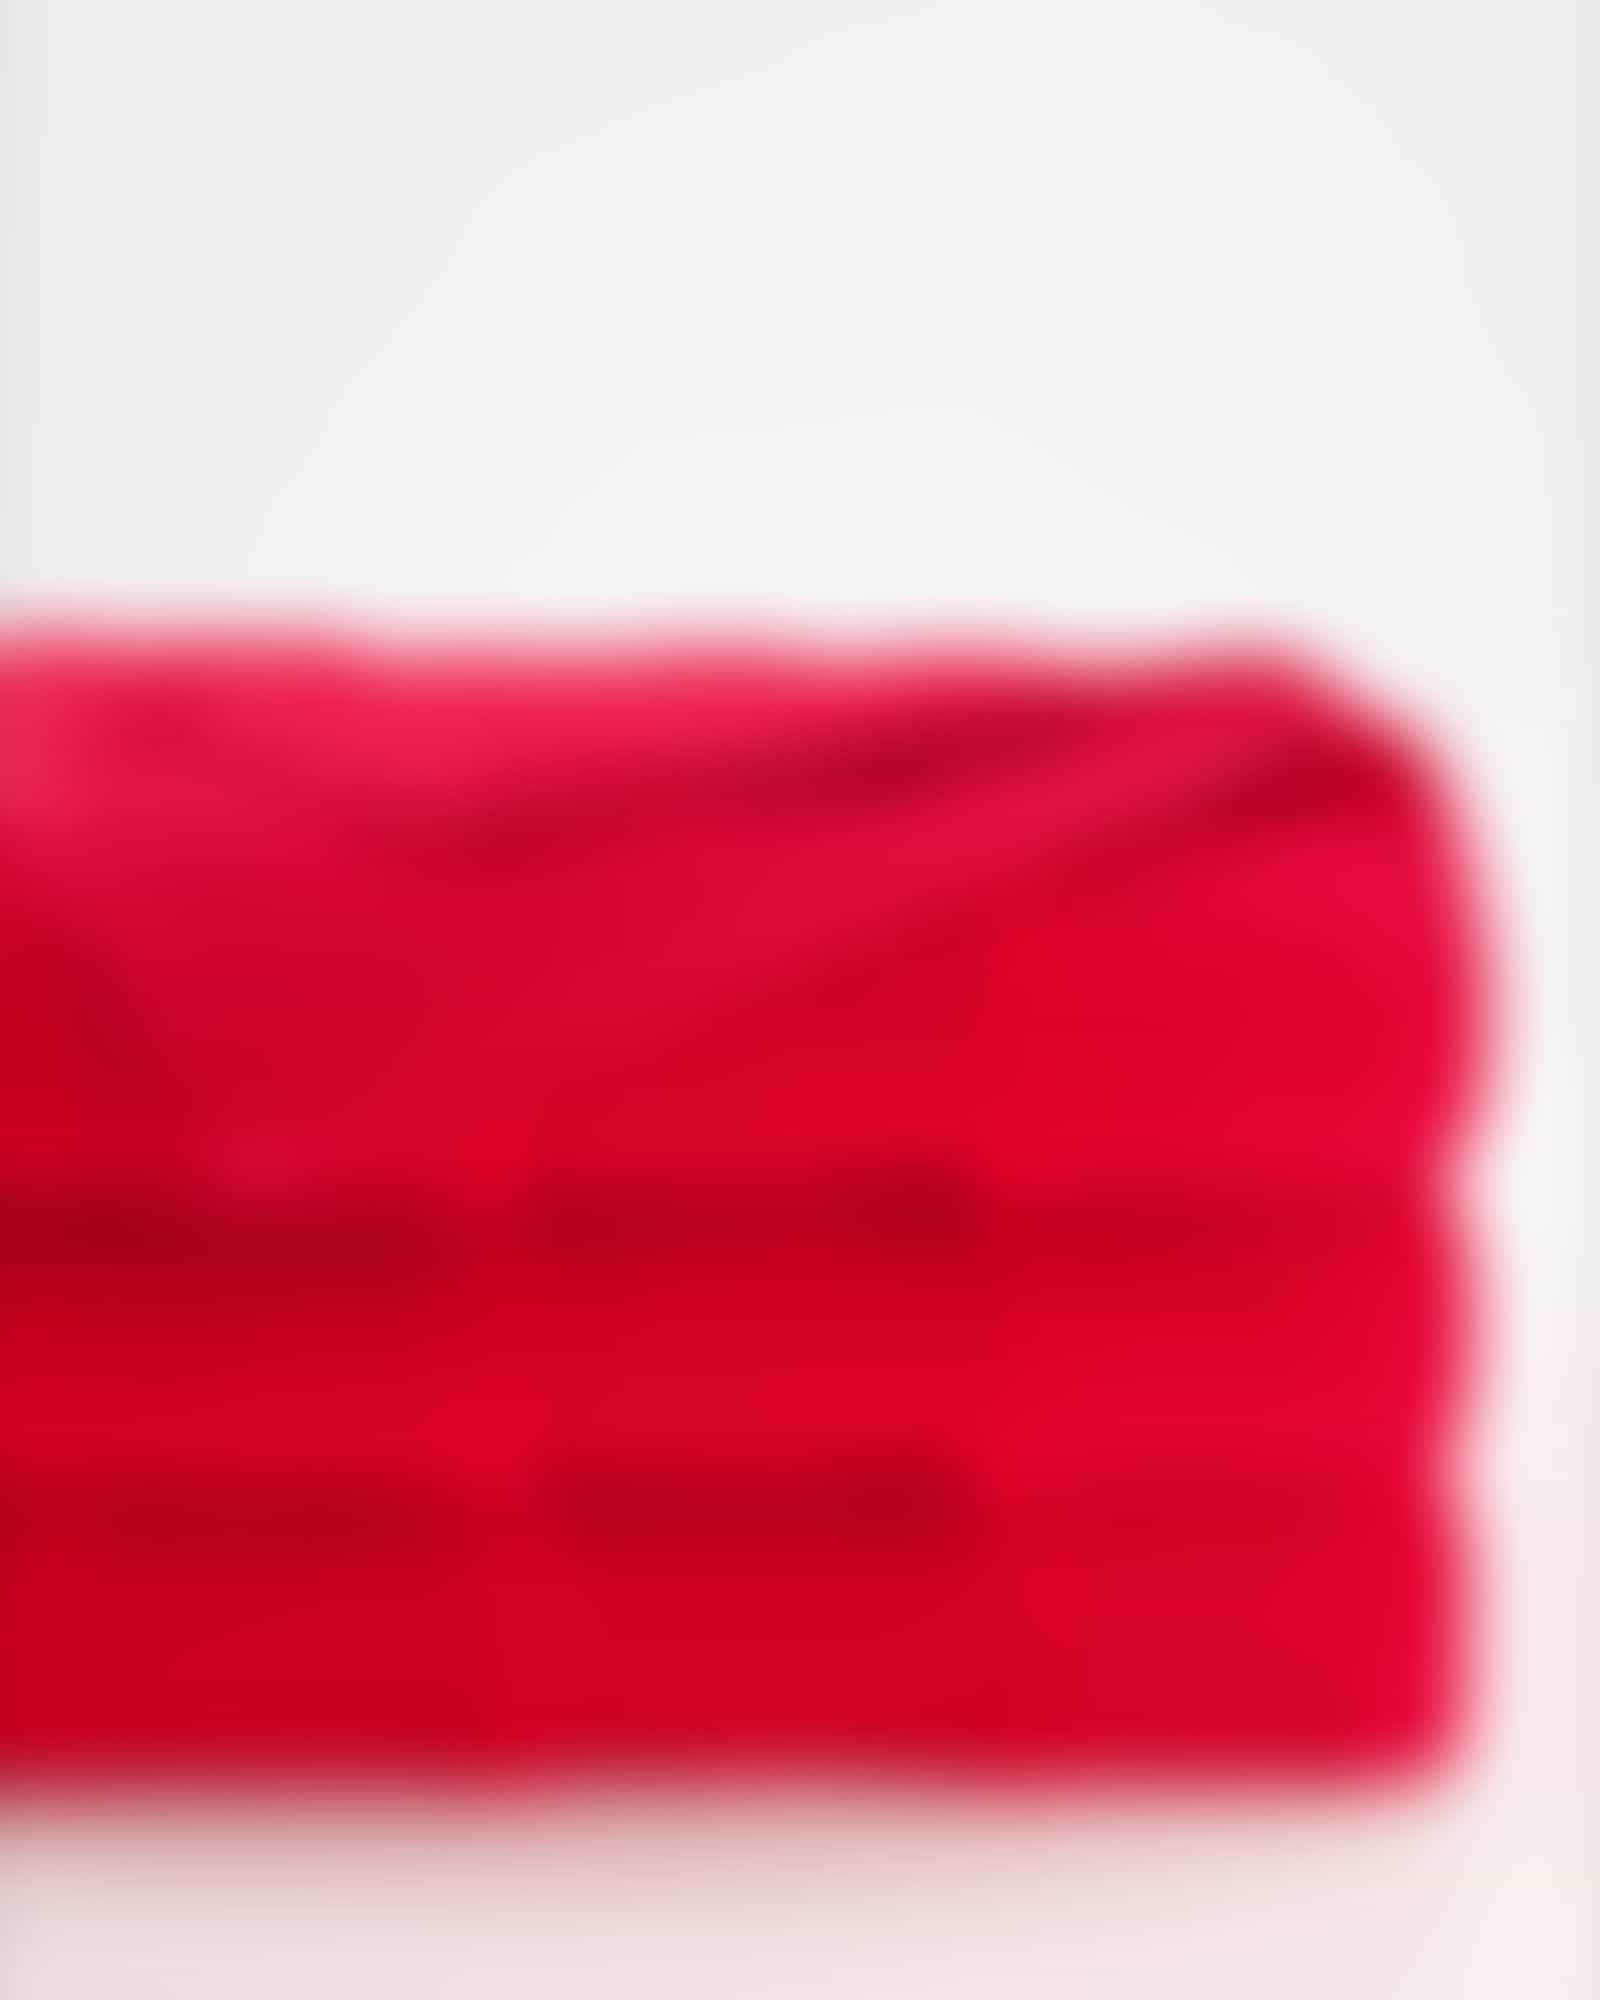 Cawö - Noblesse Uni 1001 - Farbe: 203 - rot - Handtuch 50x100 cm